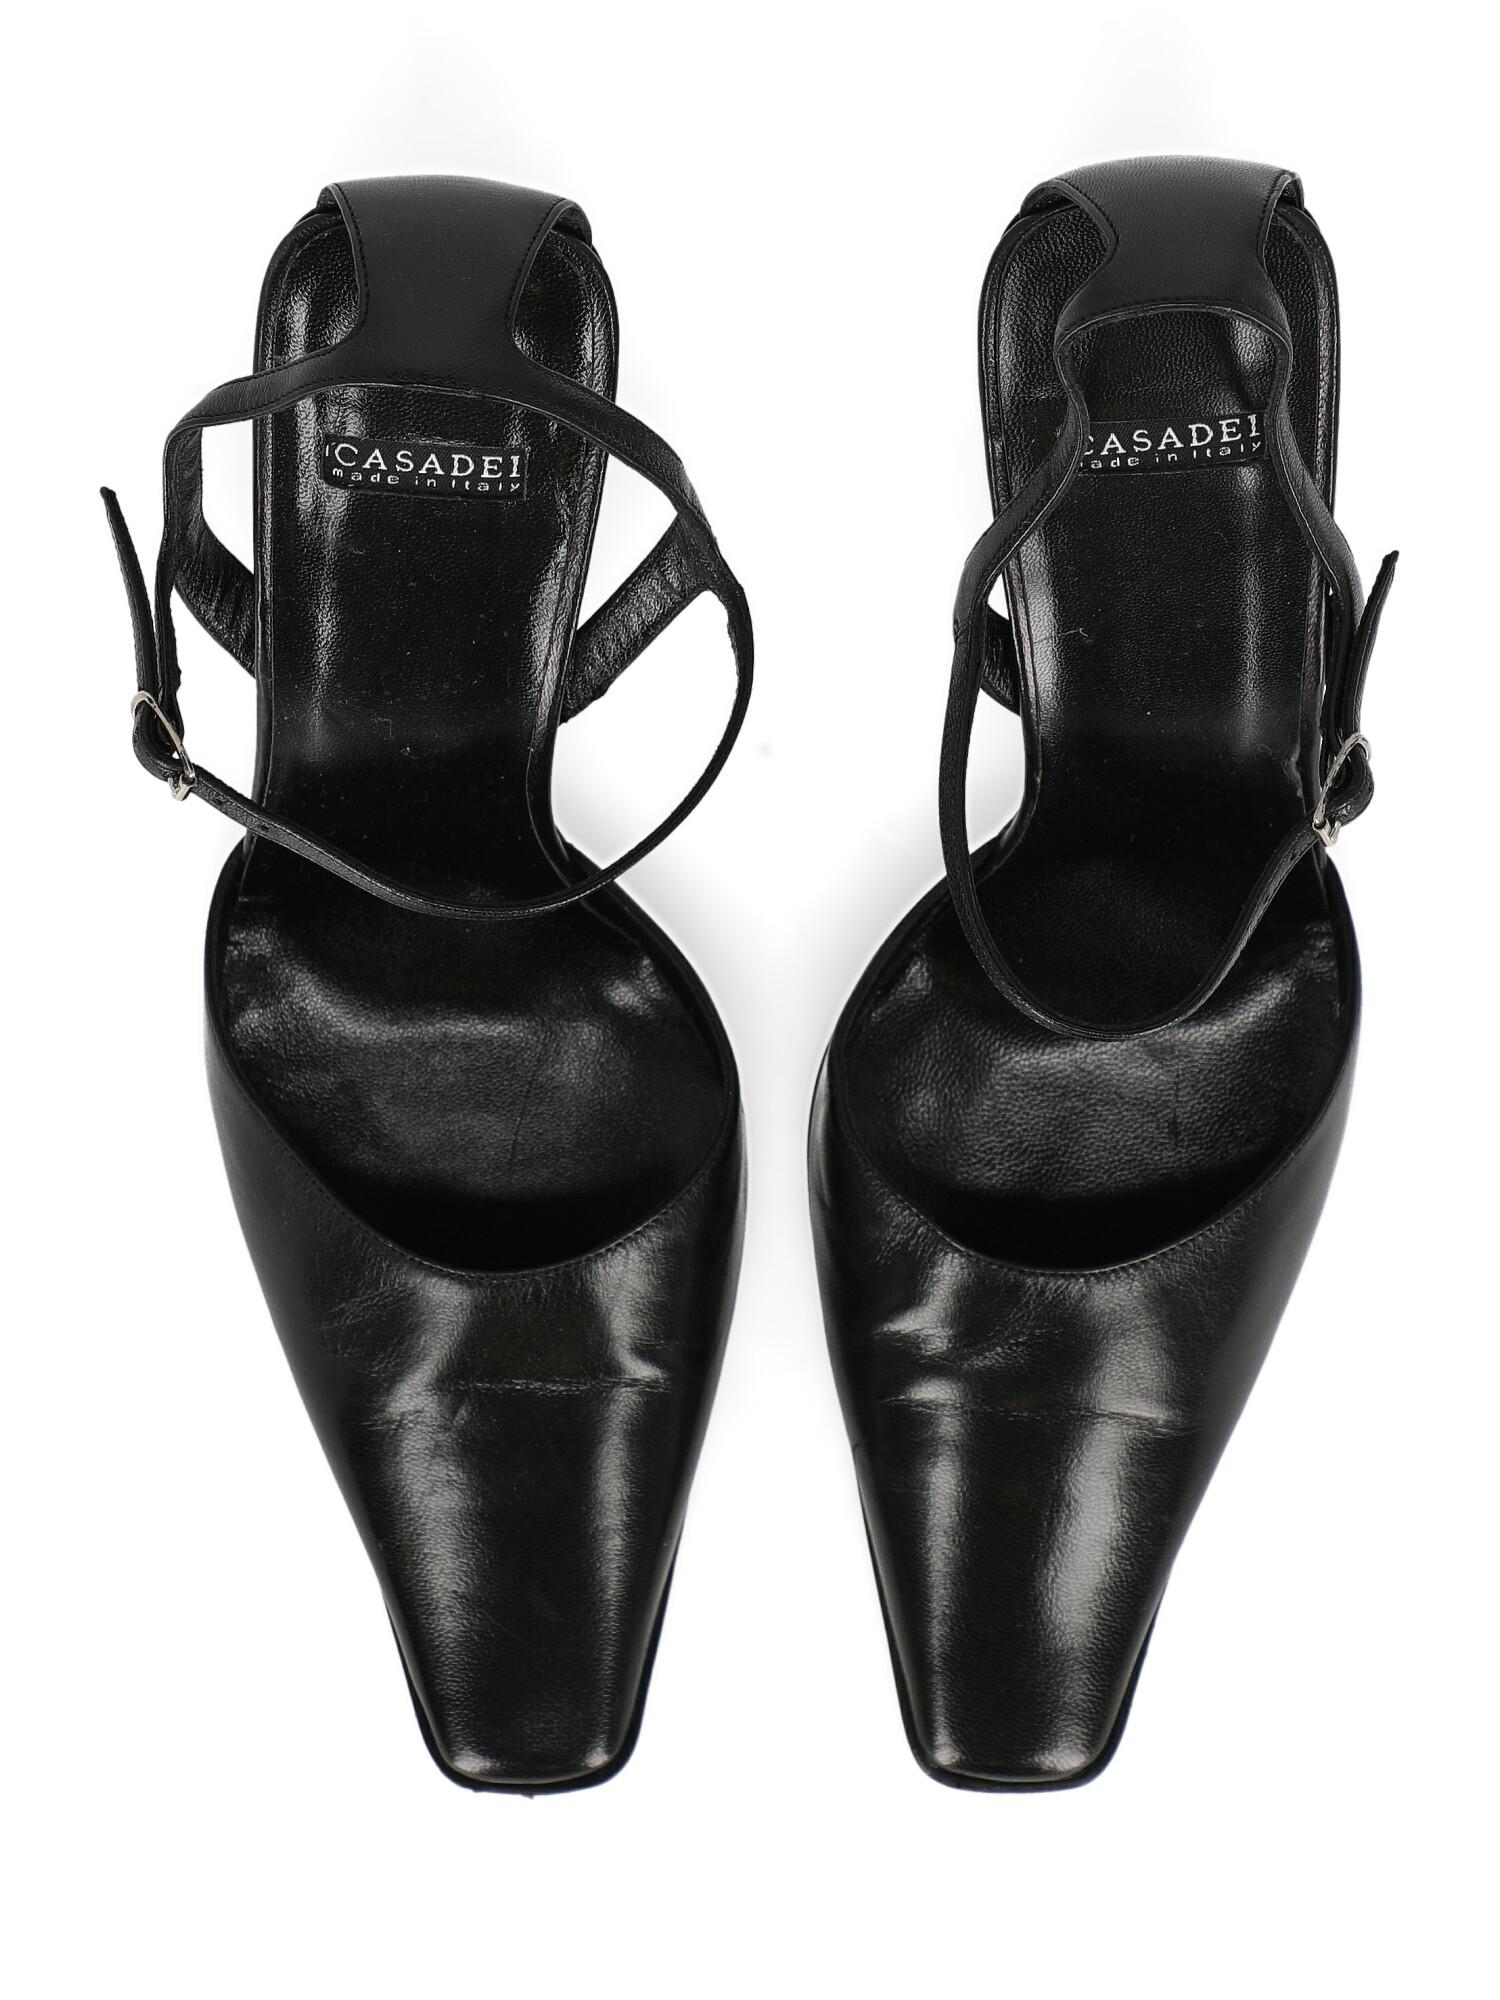 Casadei Woman Pumps Black Leather US 8 For Sale 1